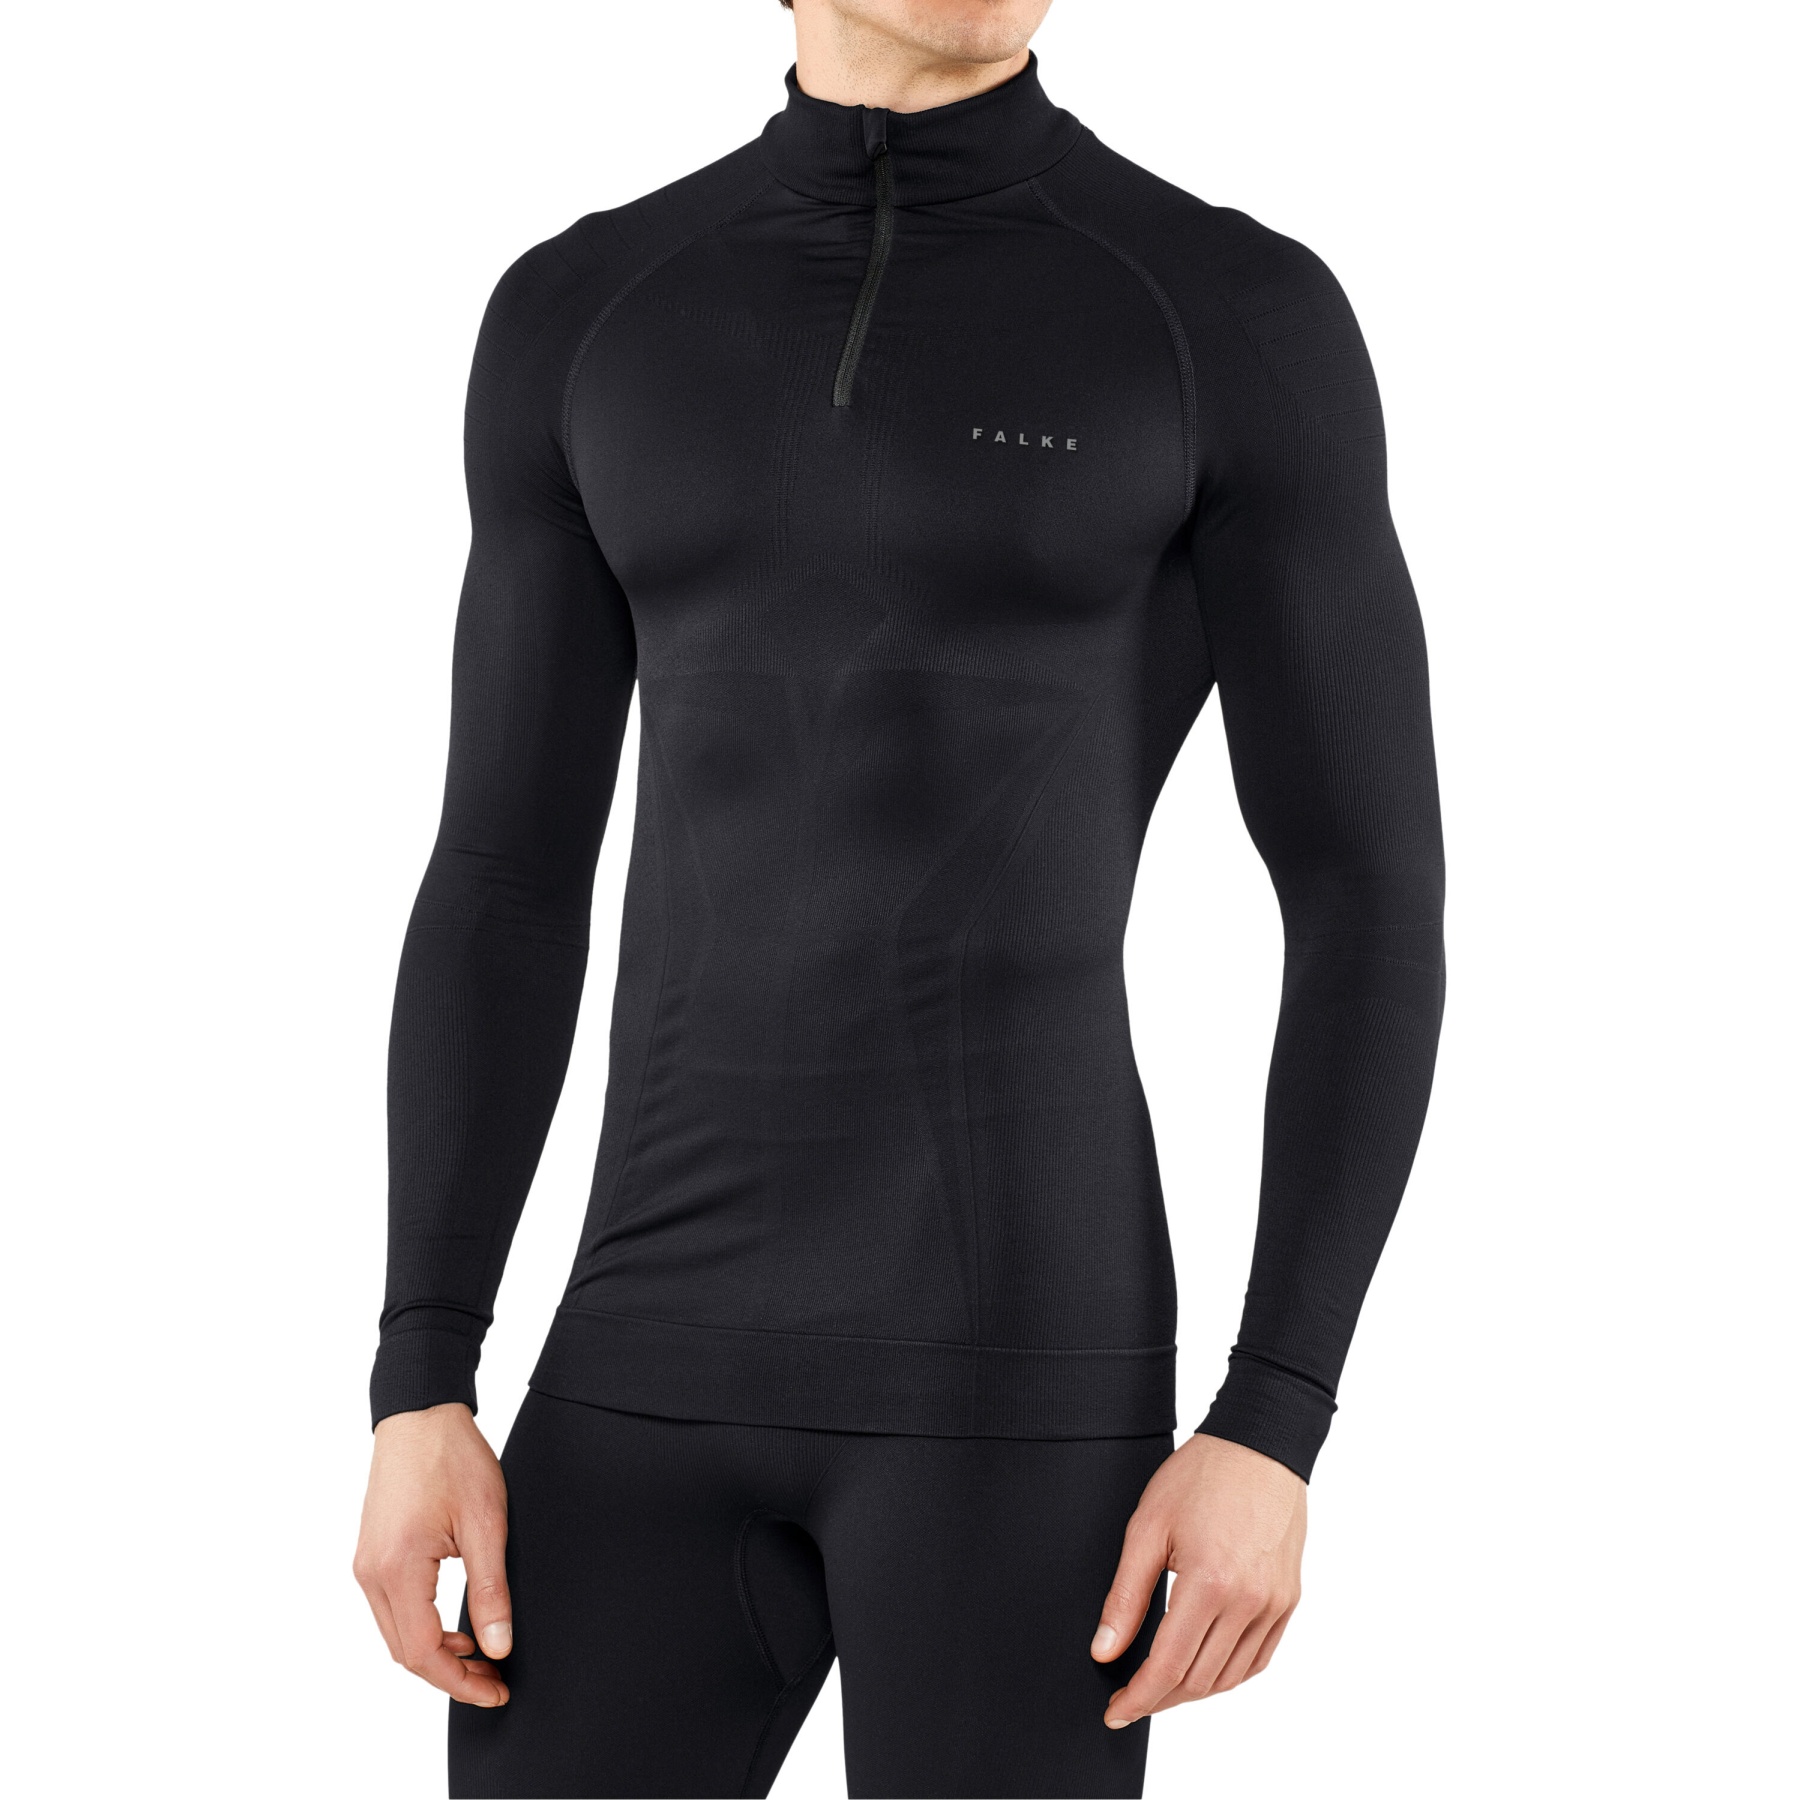 Picture of Falke Maximum Warm Half-Zip Longsleeve Shirt - black 3000